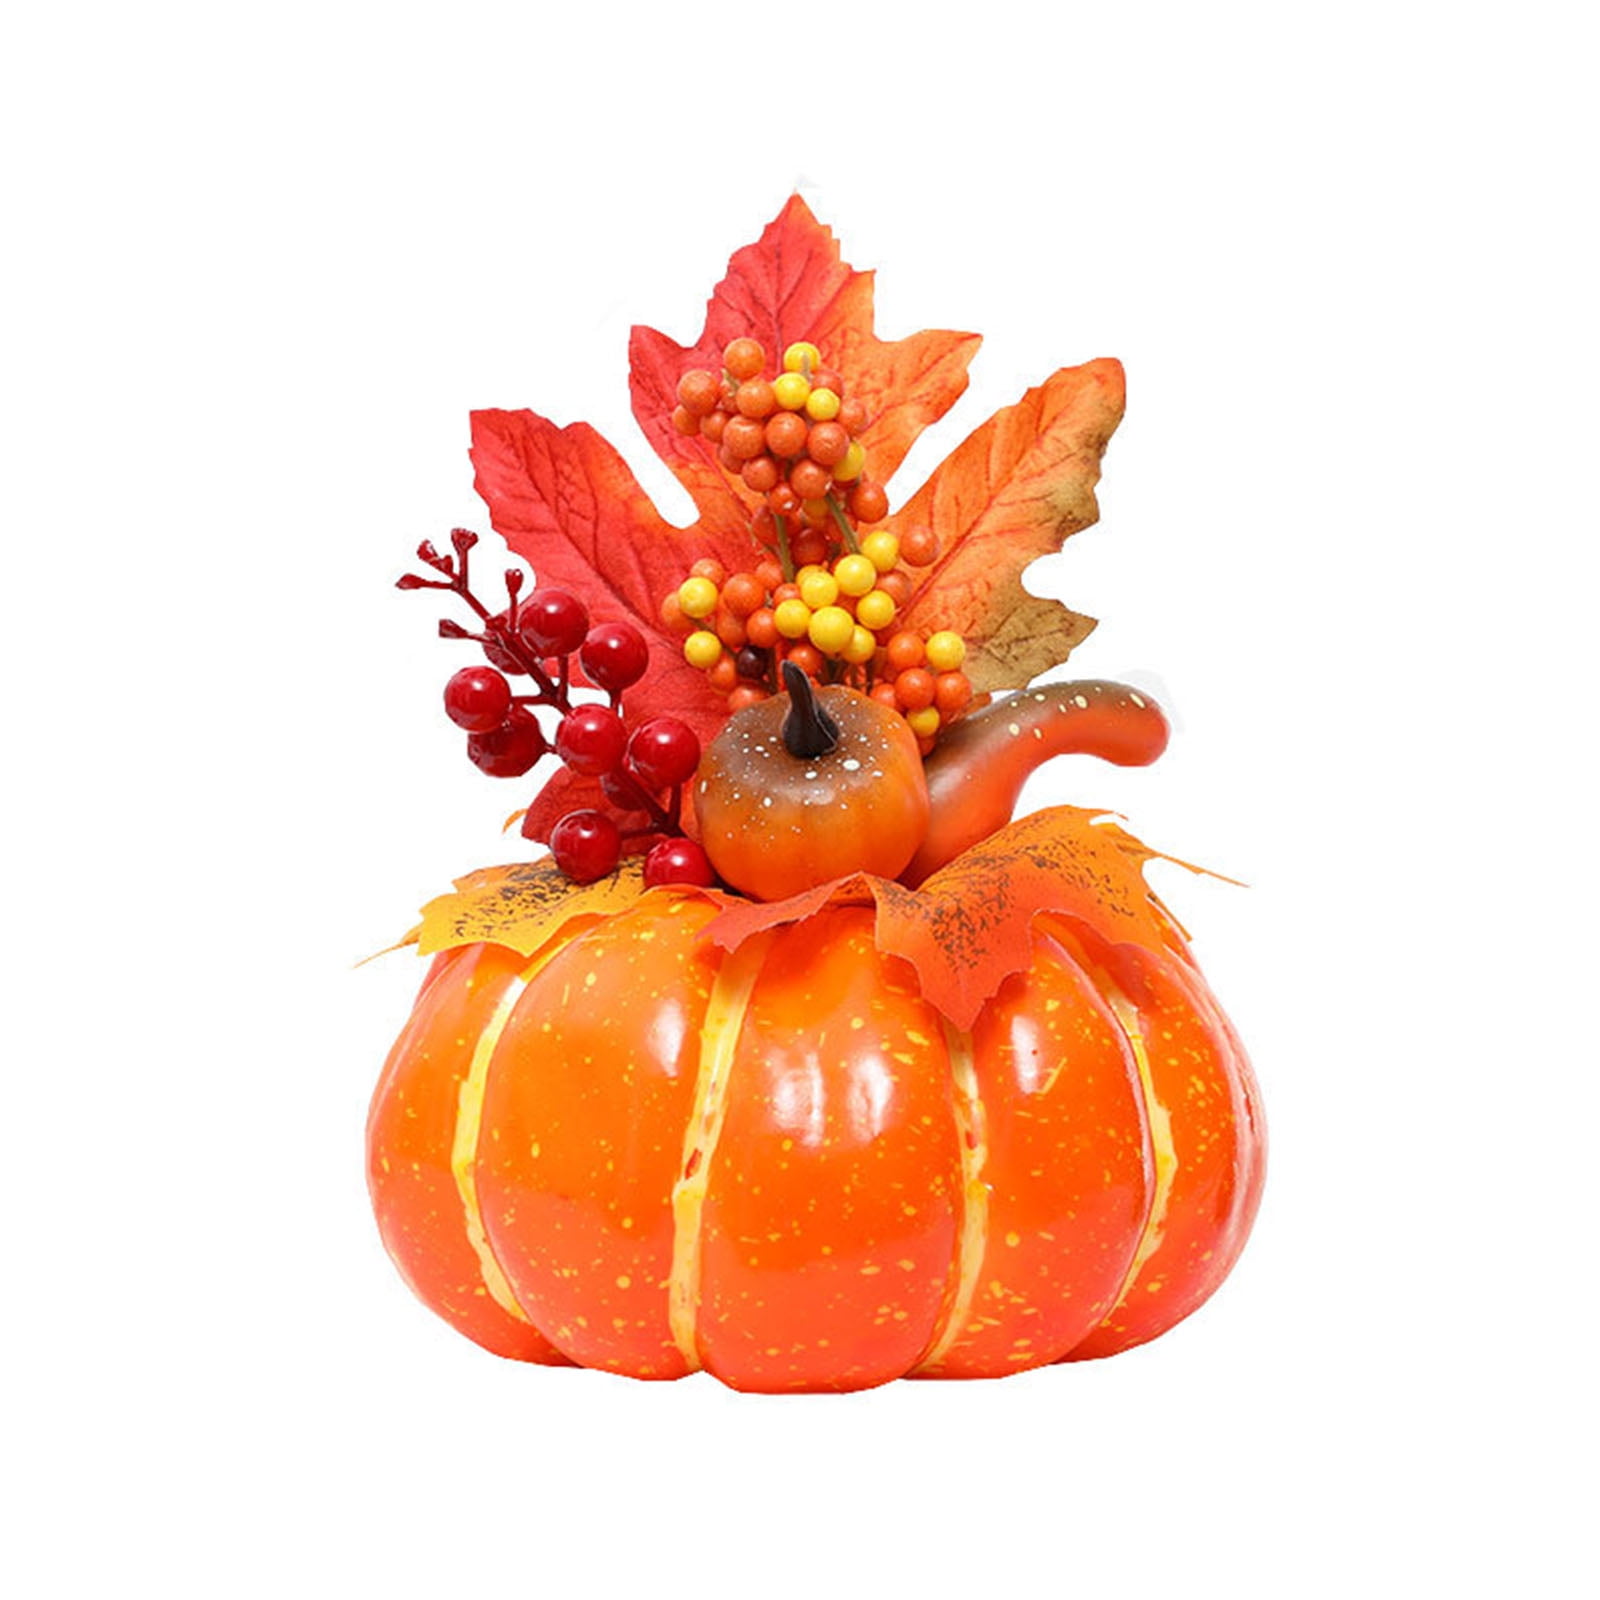 Details about   Thanksgiving Decoration Pumpkin Maple Leaf Garland String Lights Halloween Fall 